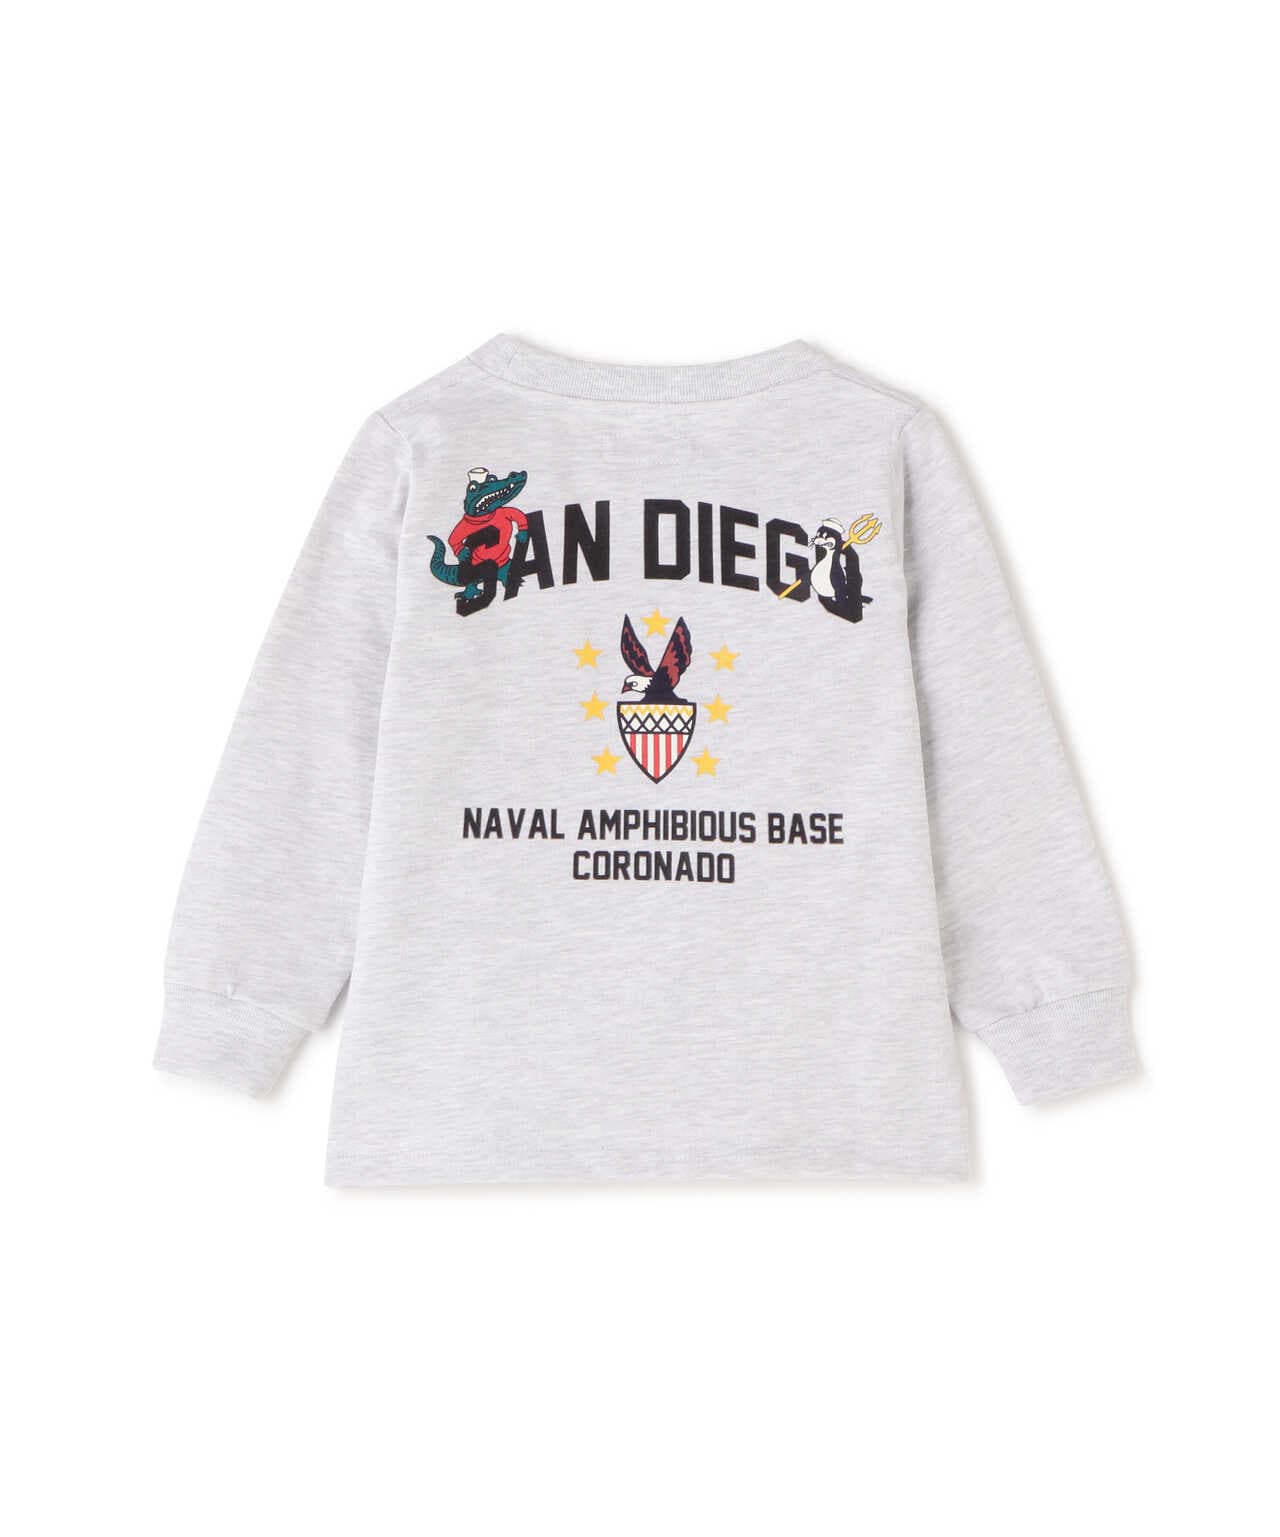 KIDS》L/S SAN DIEGO POCEKT T-SHIRT/サンディエゴ ポケット Tシャツ 